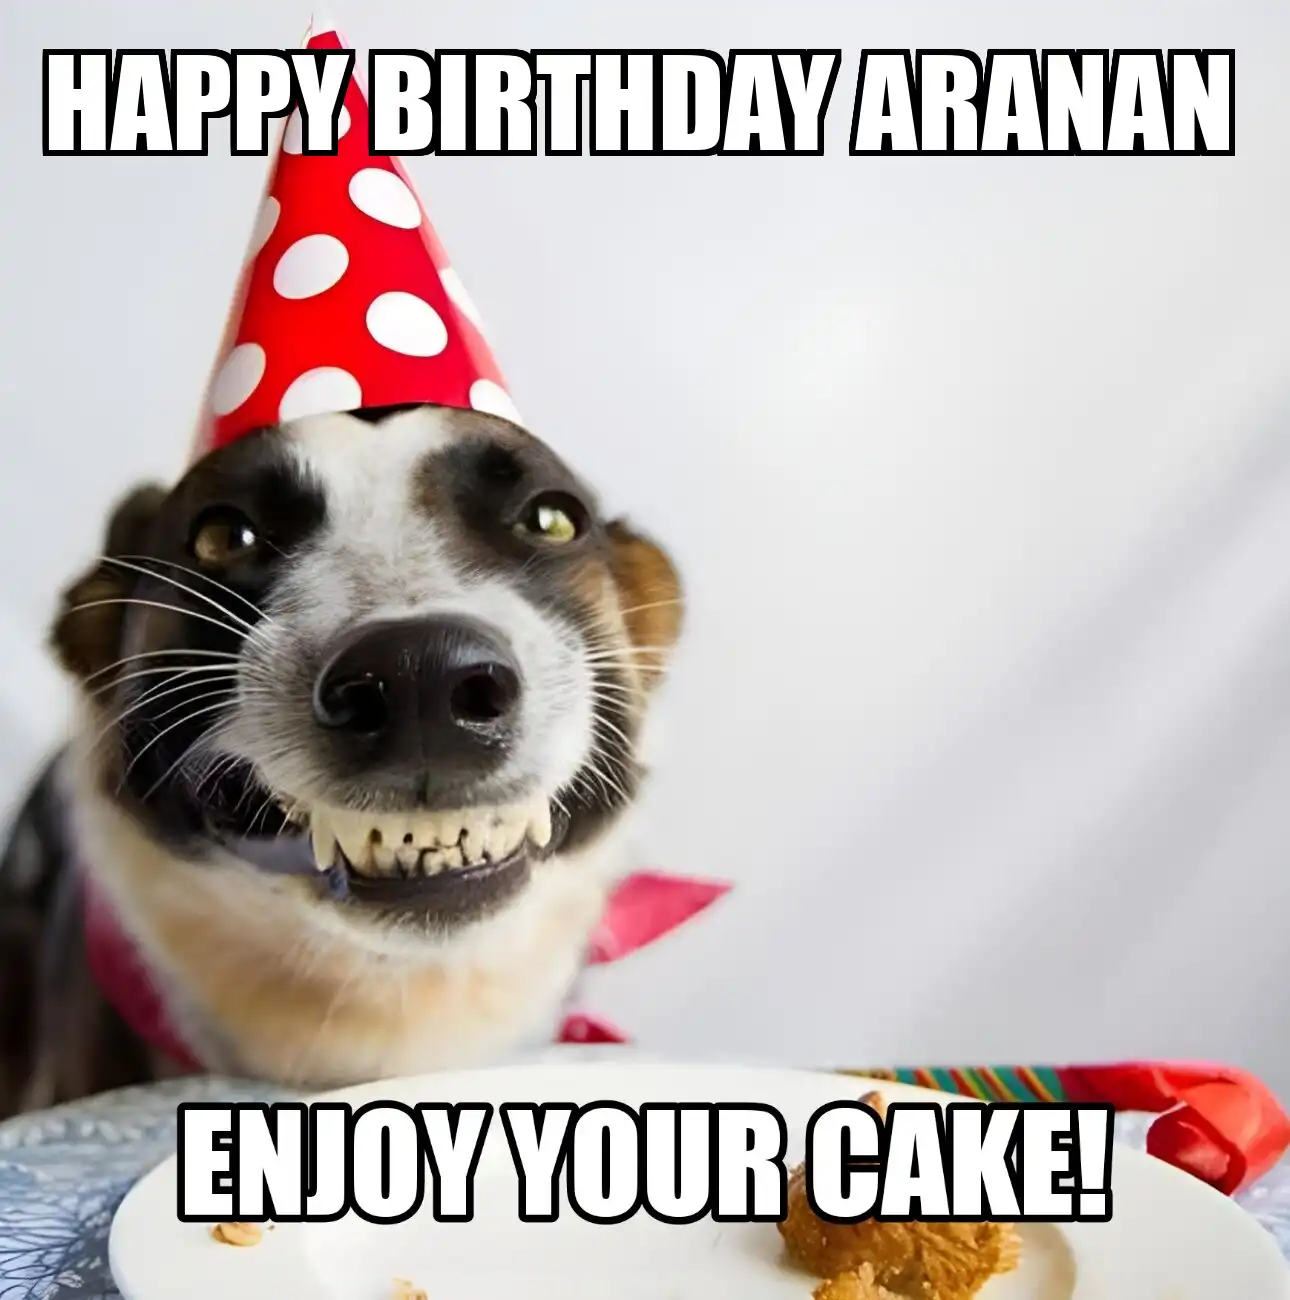 Happy Birthday Aranan Enjoy Your Cake Dog Meme